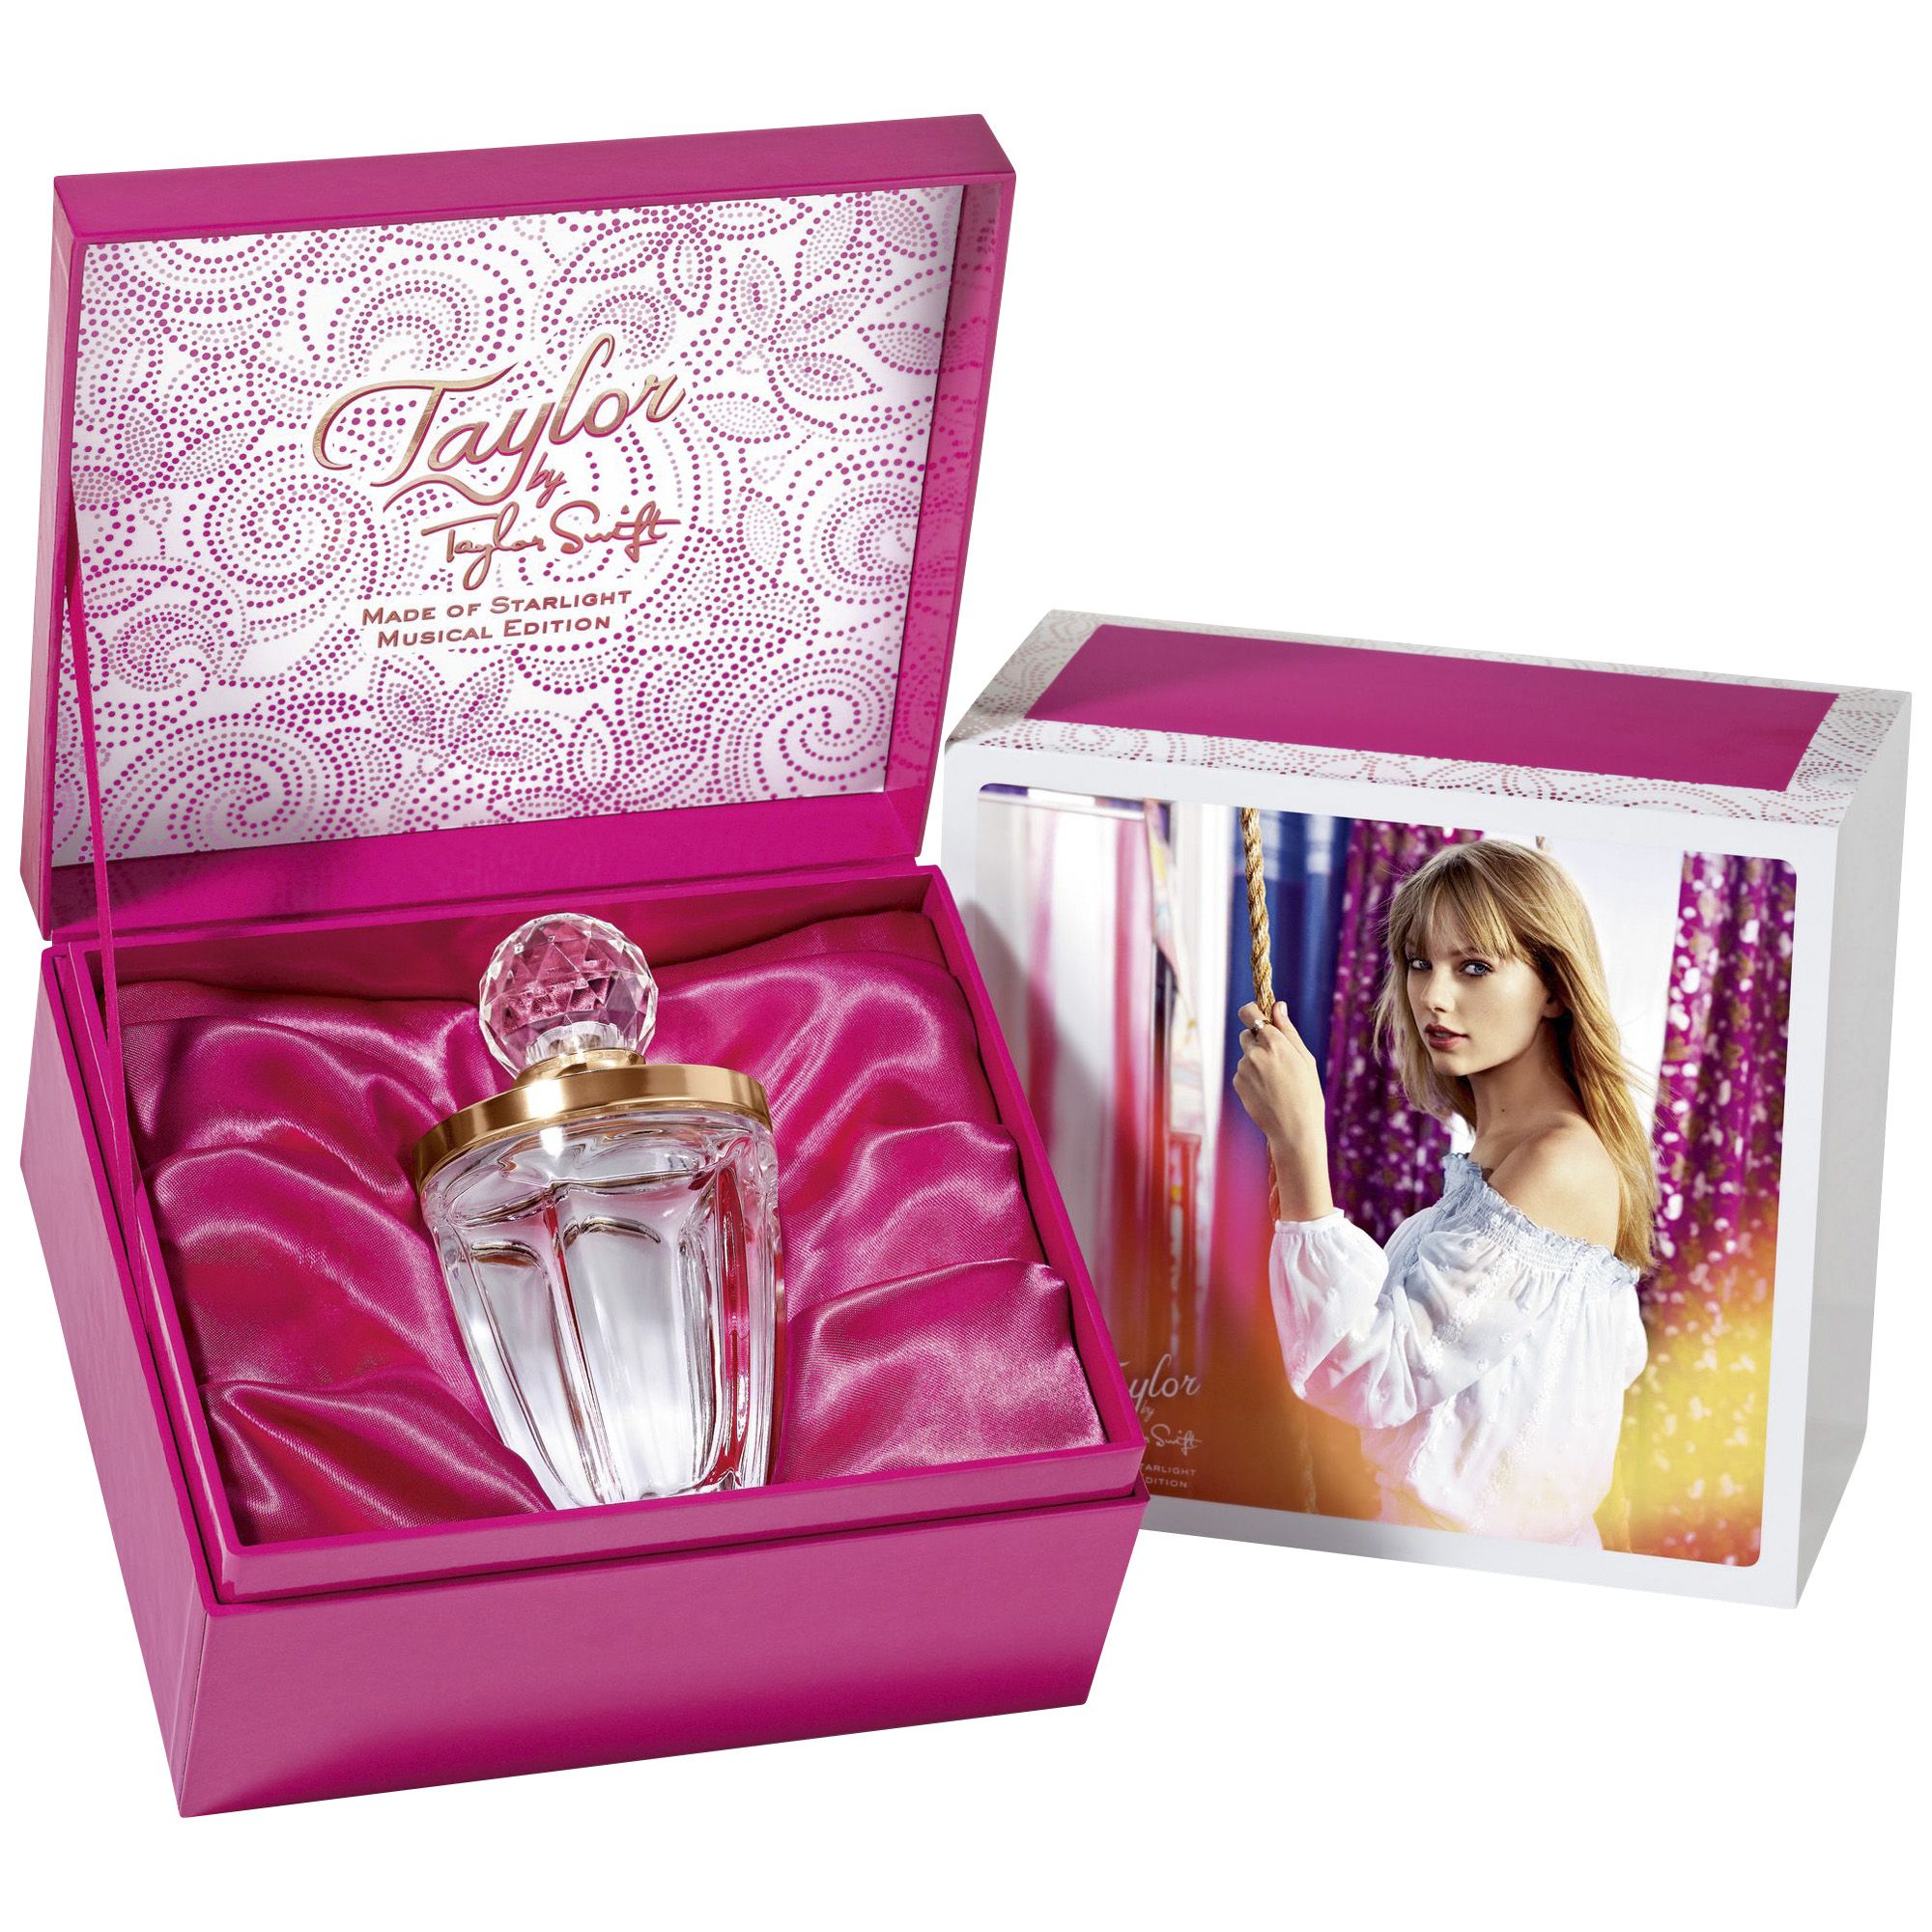 Taylor Swift Jewelry Box I just finished!